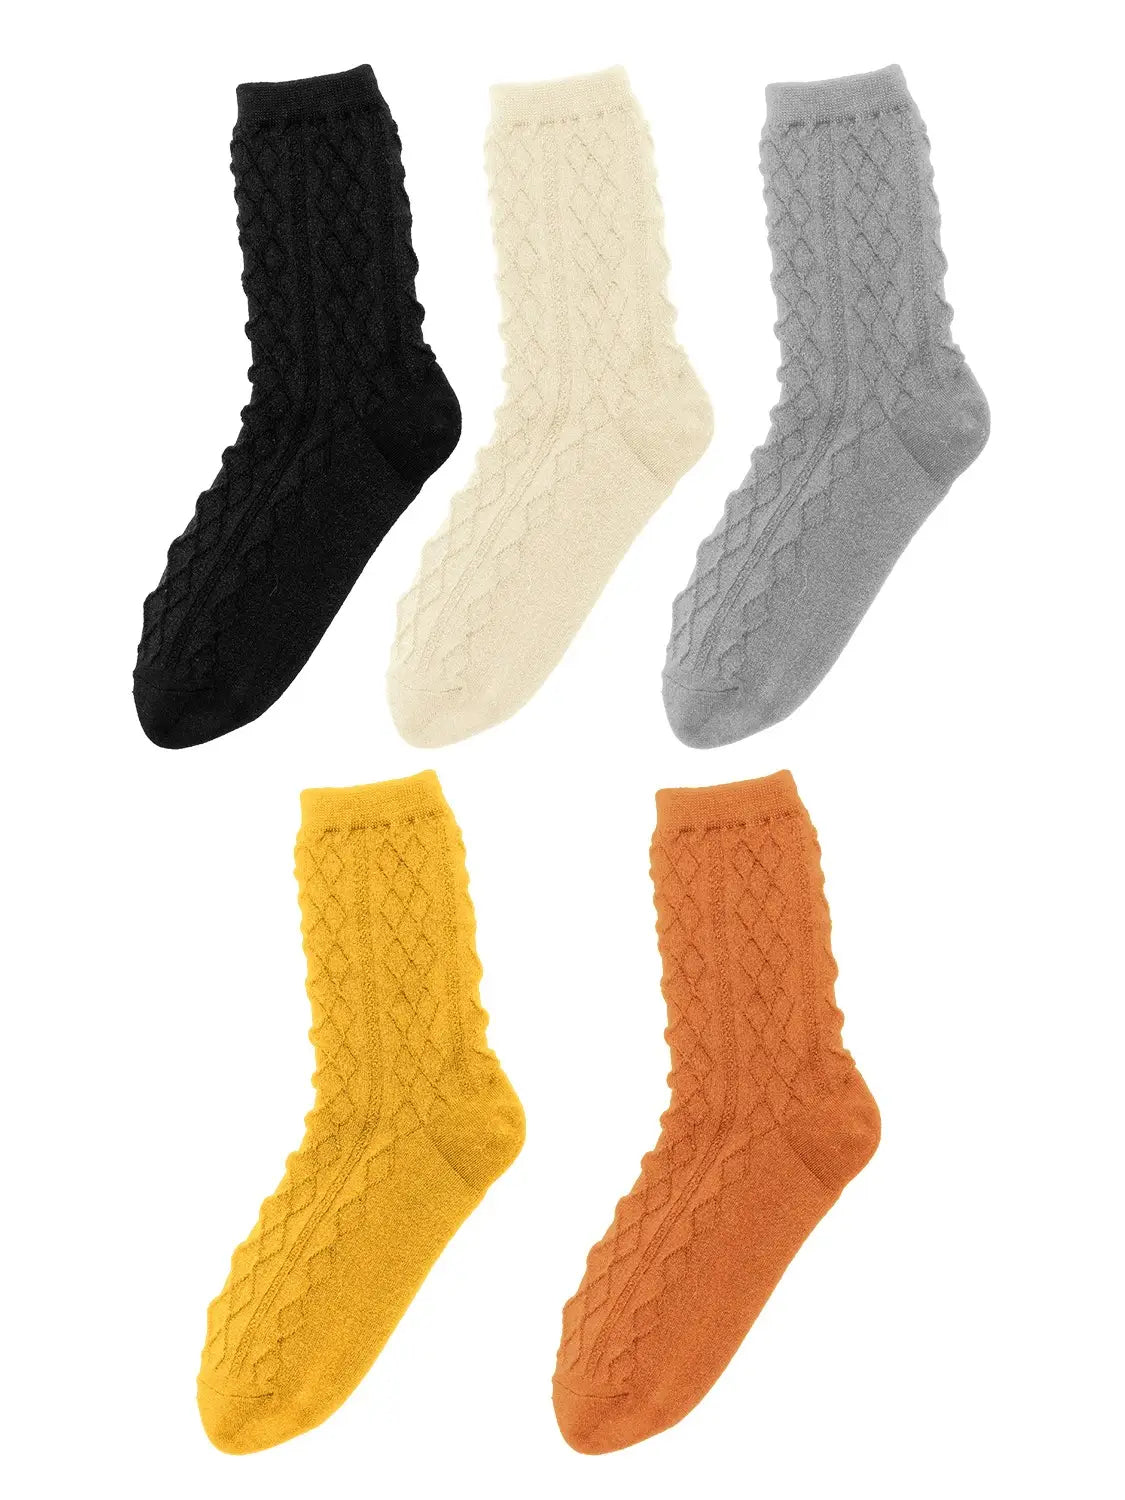 Argyle Socks - Multiple Colors